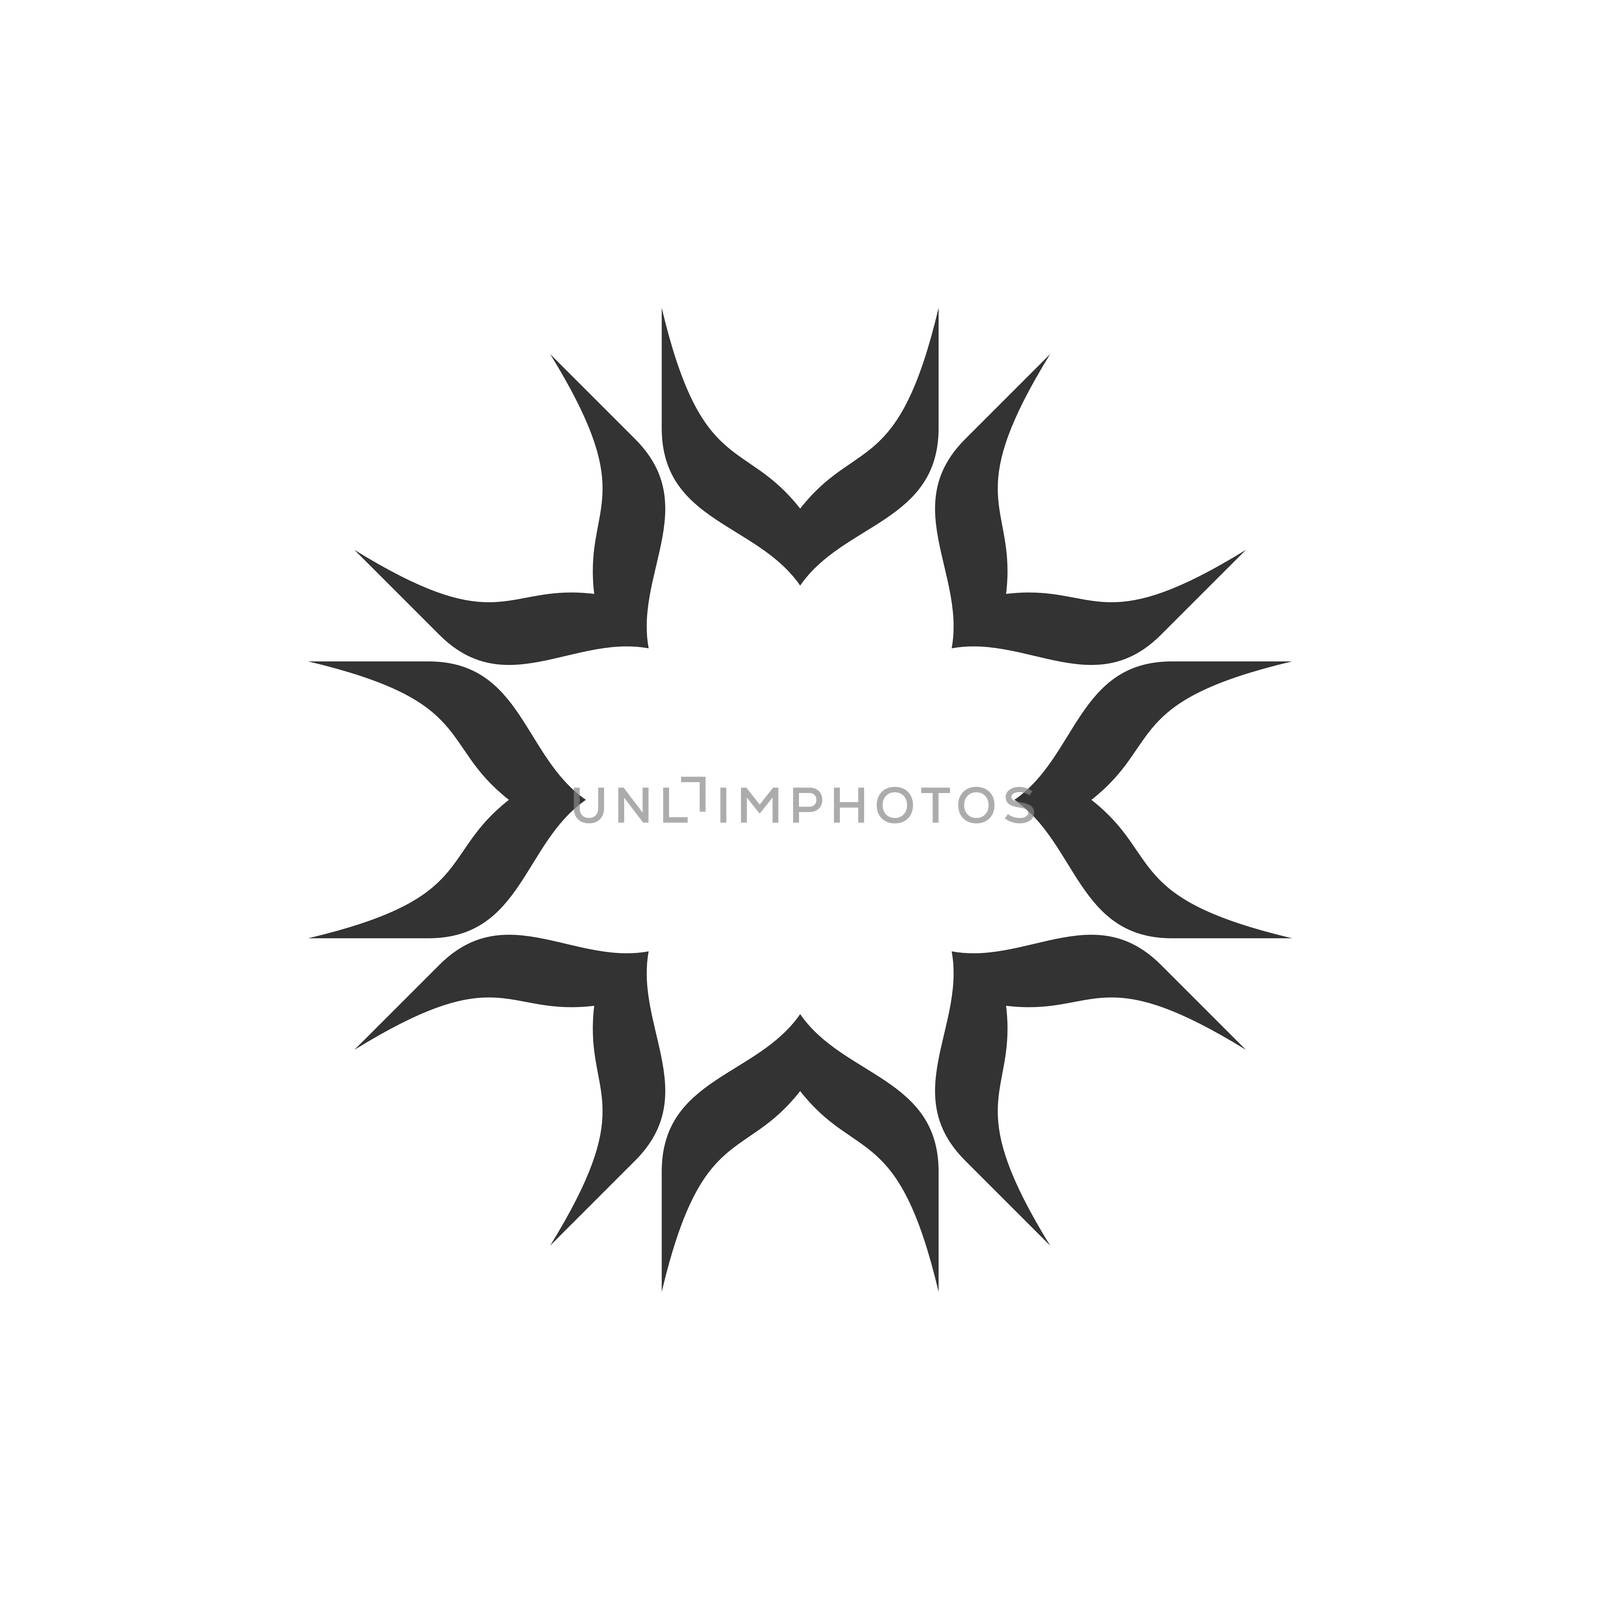 Black Star Decorative Logo Template Illustration Design. Vector EPS 10. by soponyono1